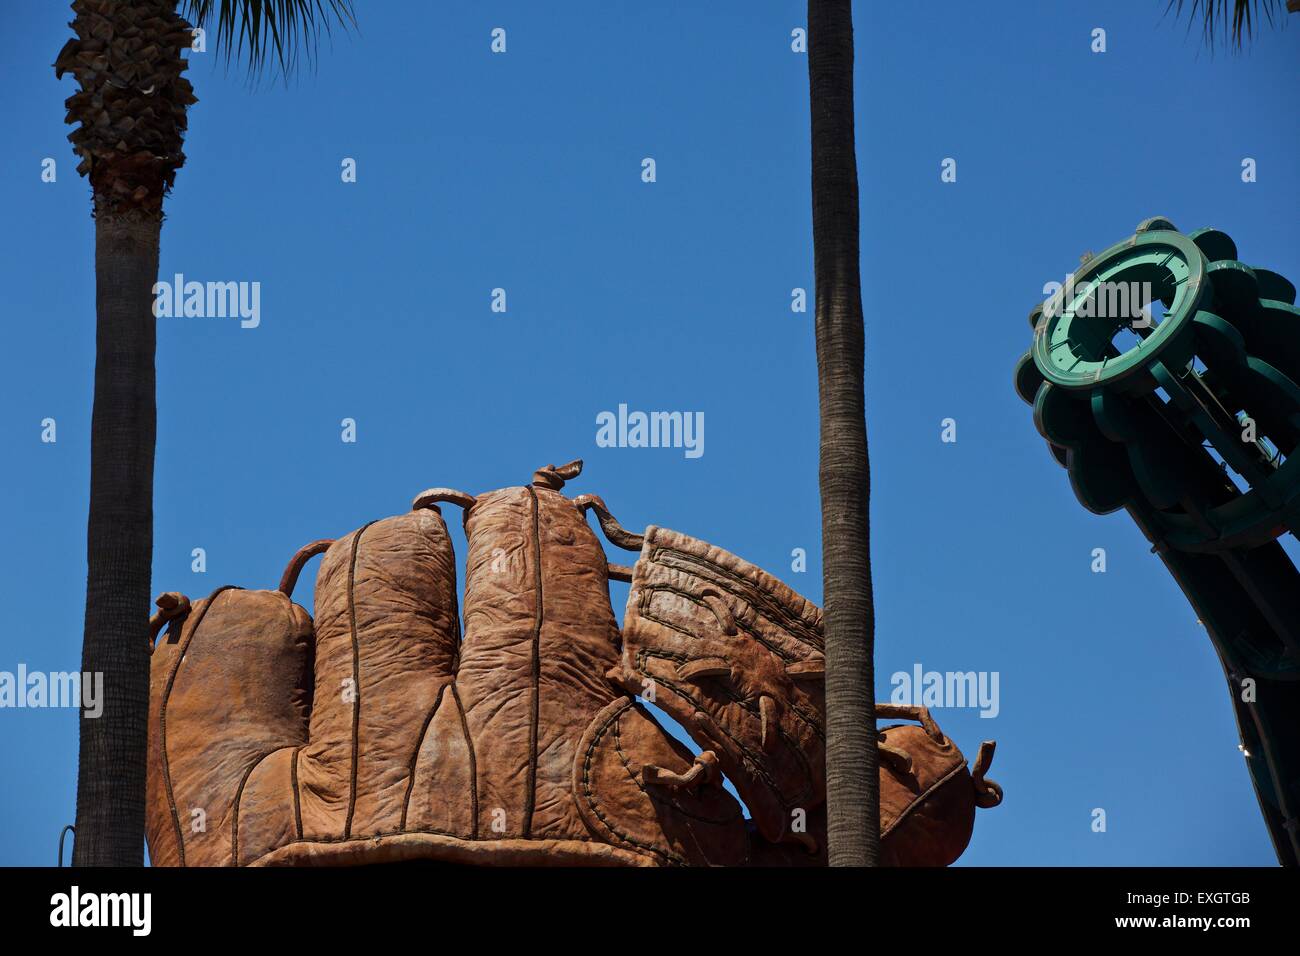 Giant Baseball Glove At The San Francisco Giants Stadium. Stock Photo